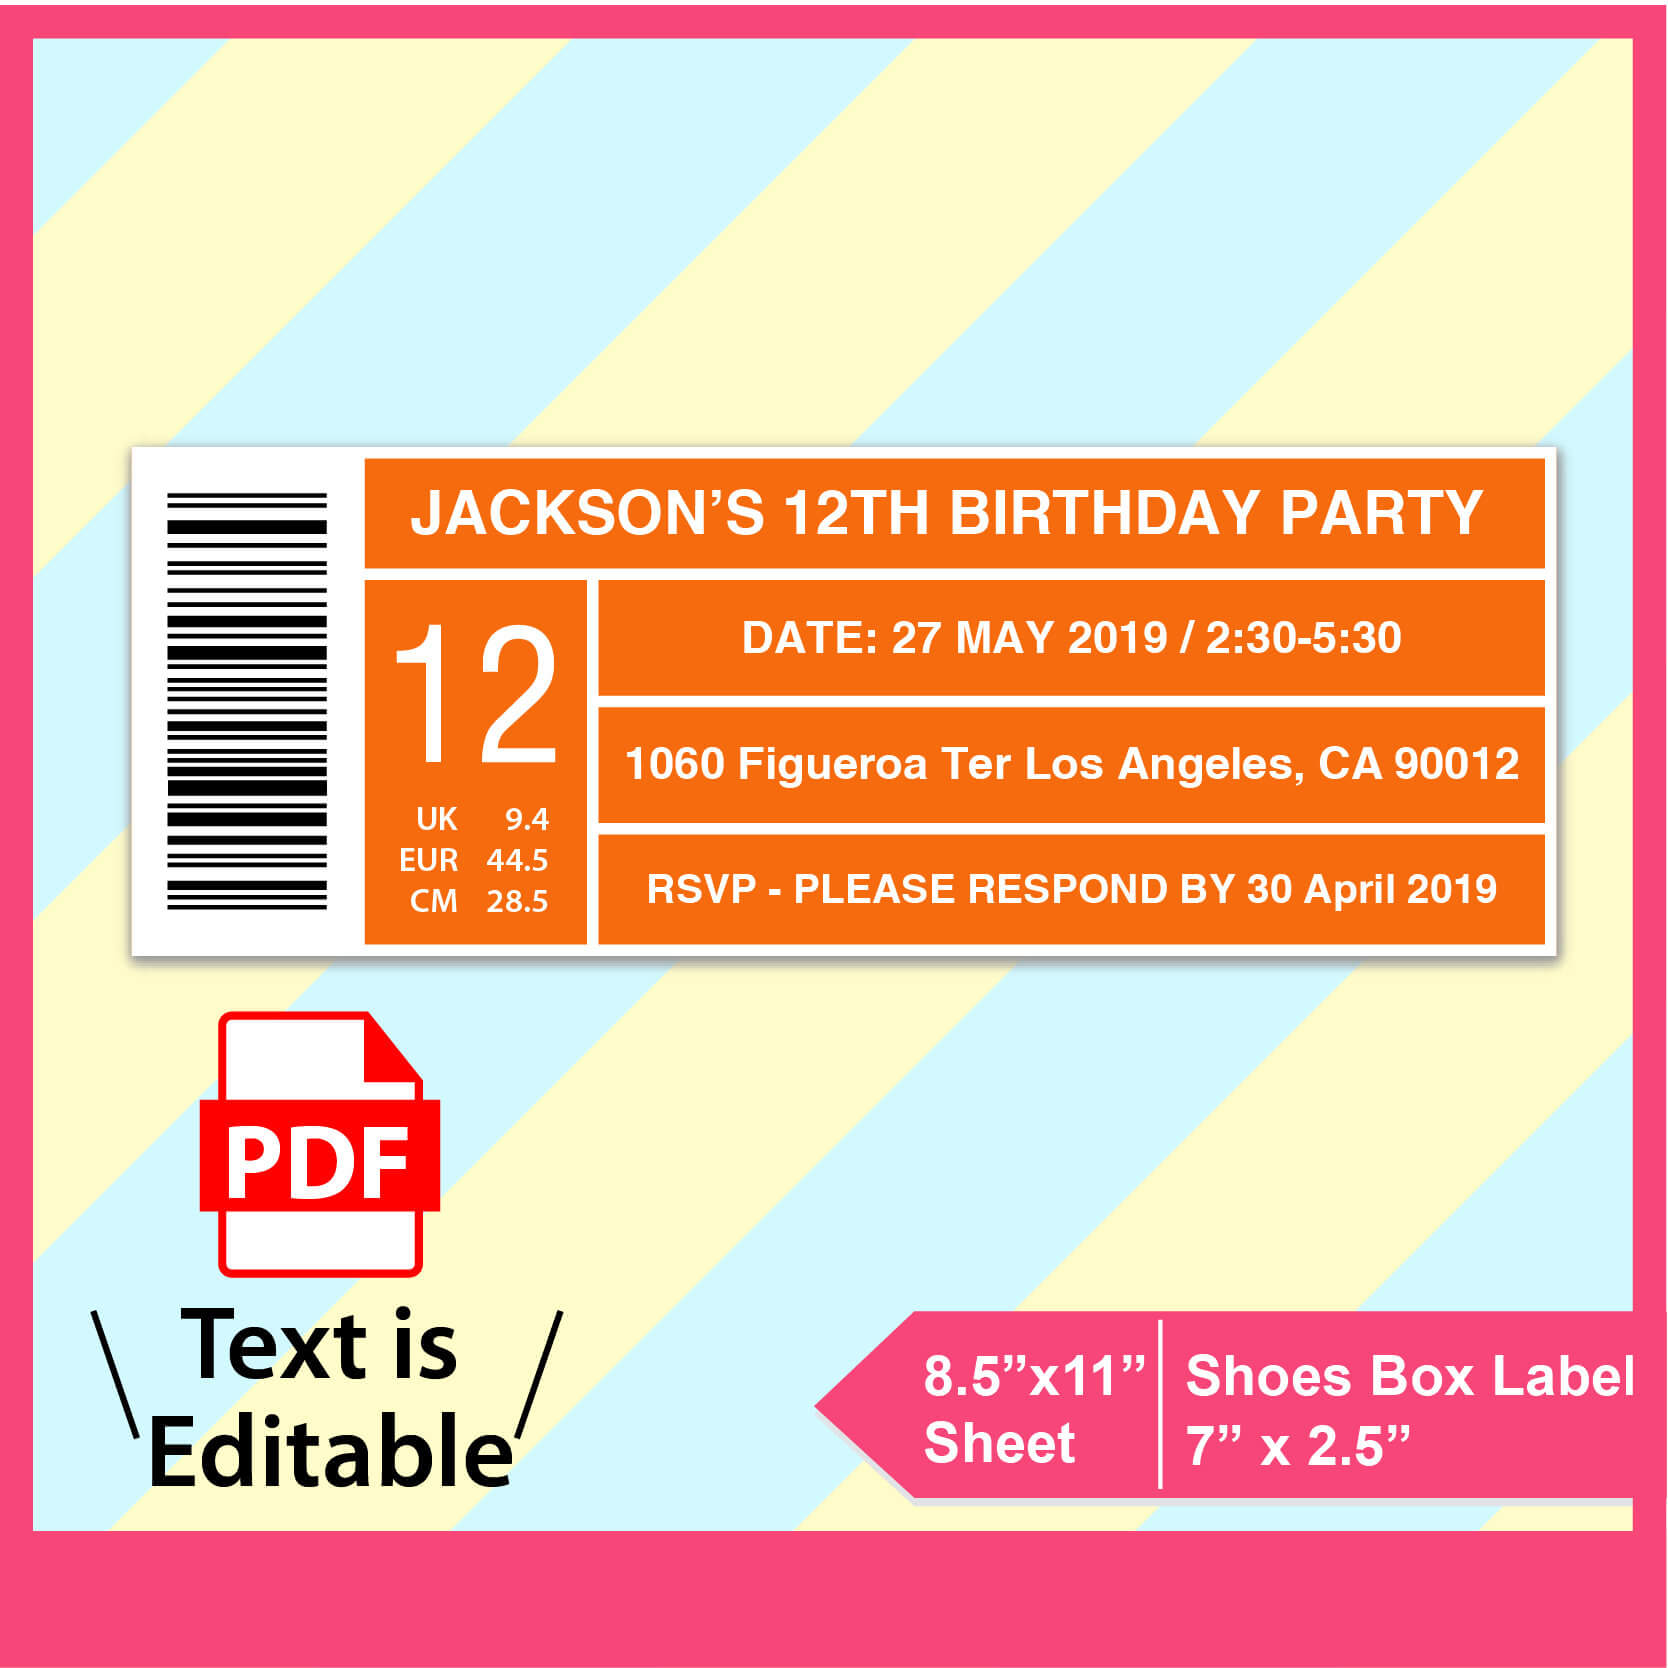 Editable Shoes Box Label Template, Invitation Template Pdf, Printable 627 Within 4 X 2.5 Label Template